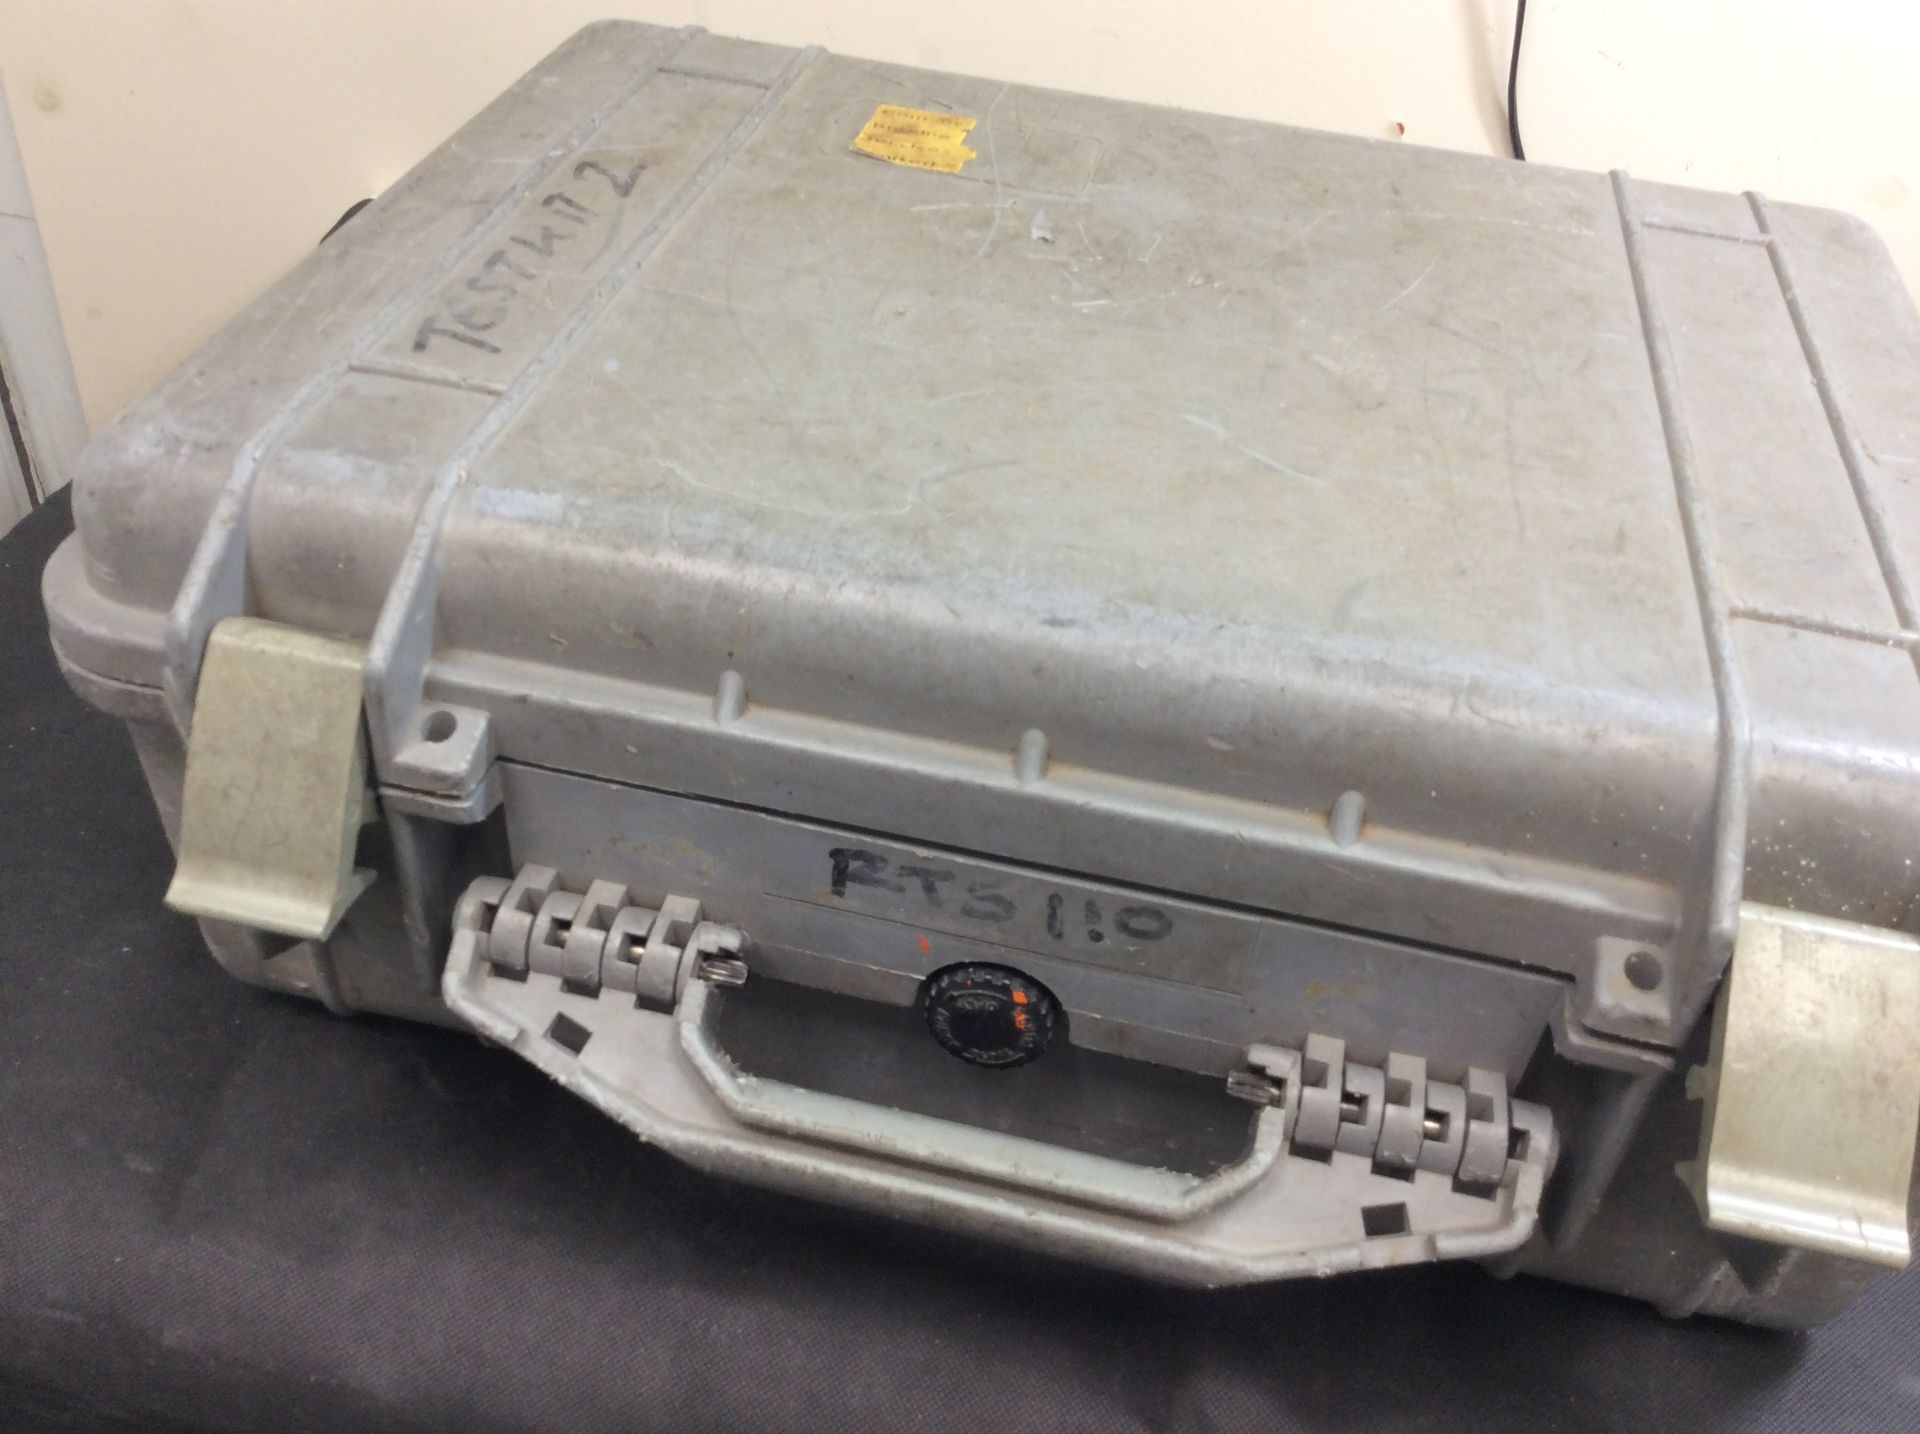 Anritsu sitemaster s251c in peli case with equipment - Image 3 of 3